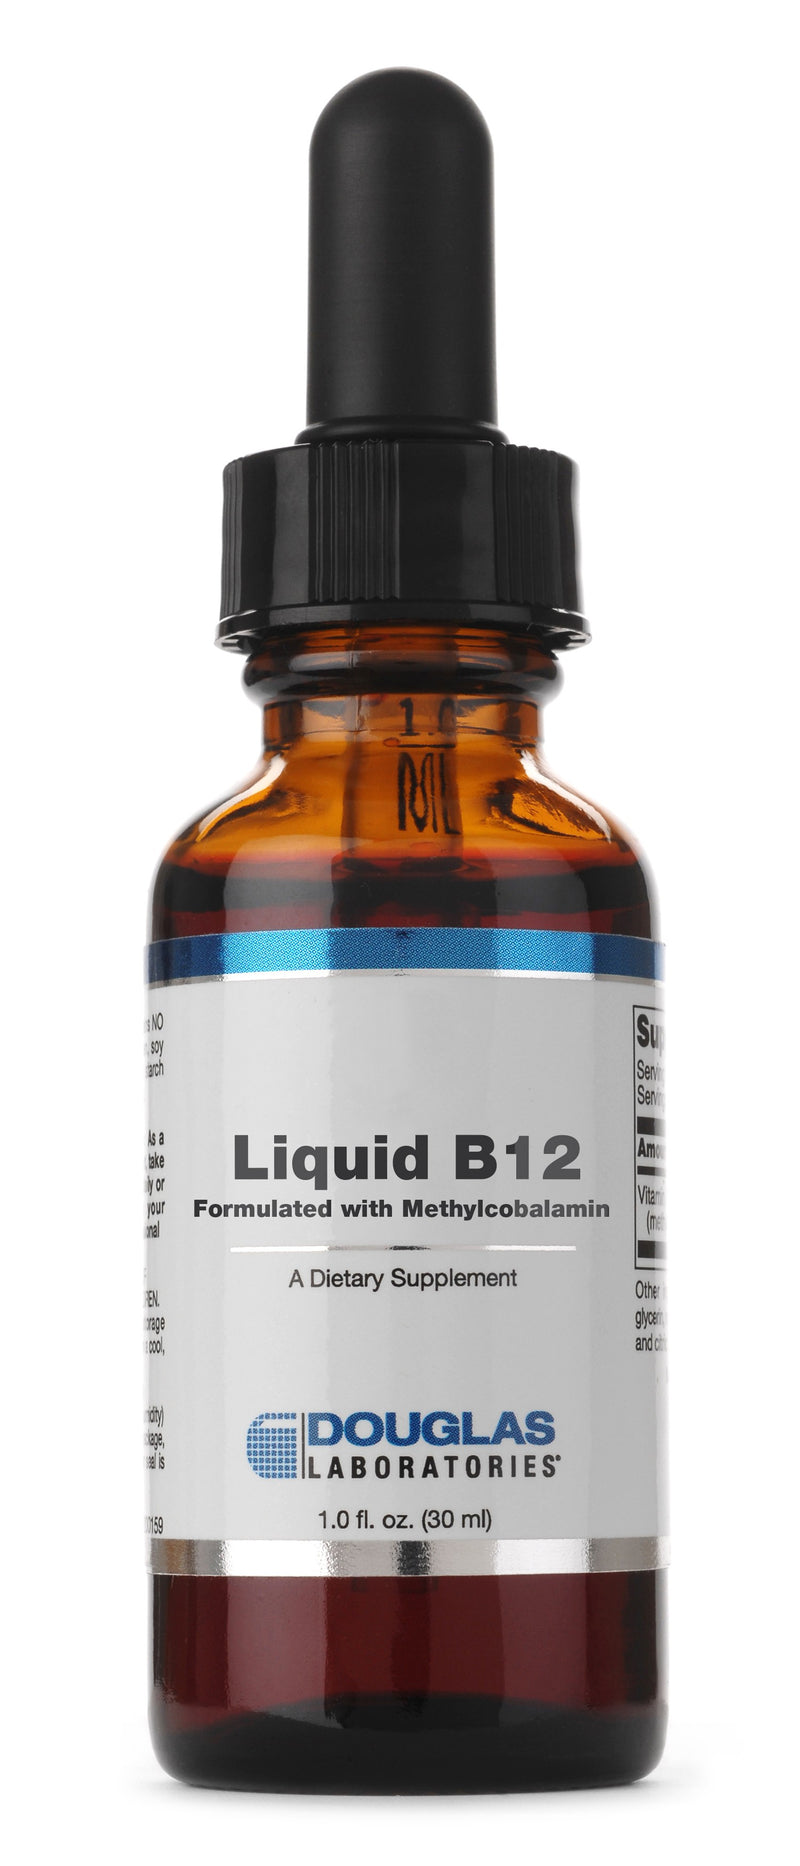 Liquid B12 Formulated with Methylcobalamin